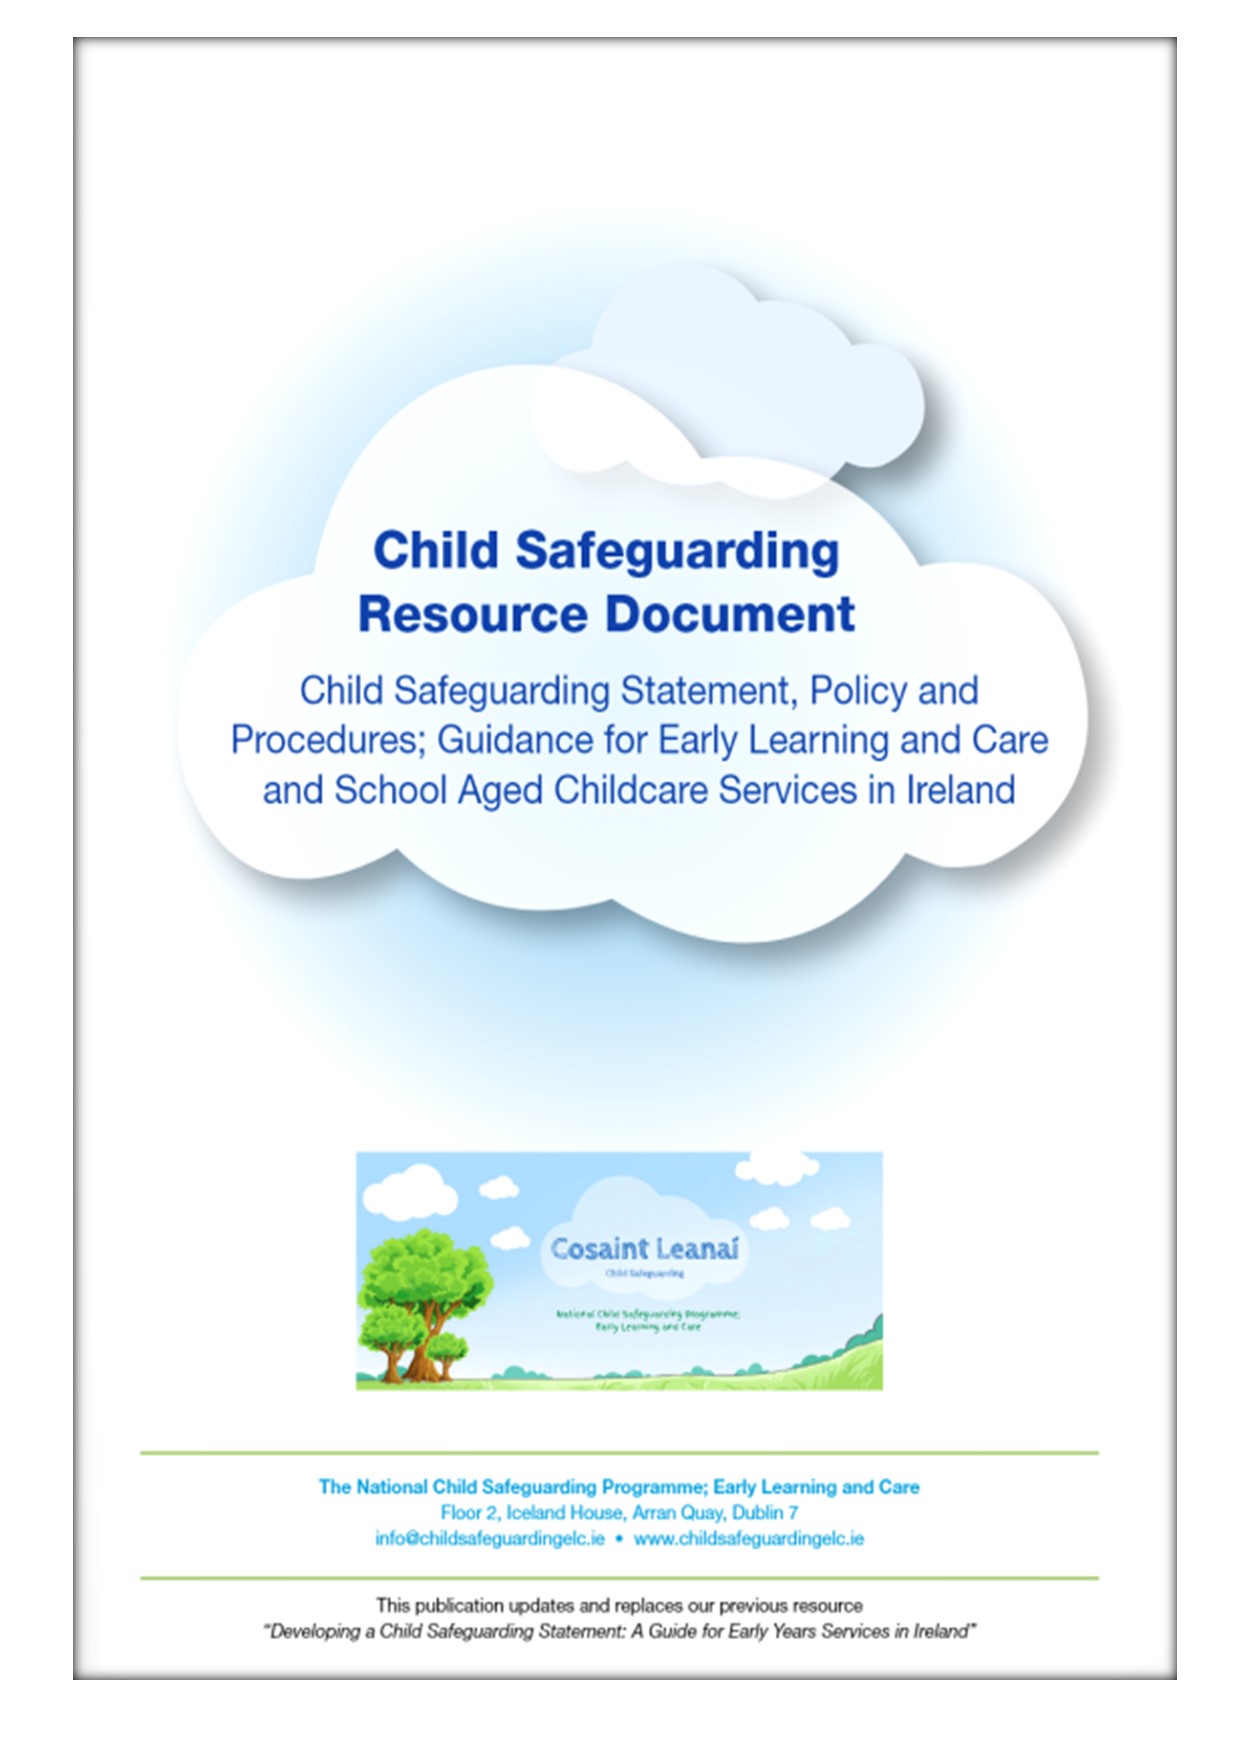 Child safeguarding resource document